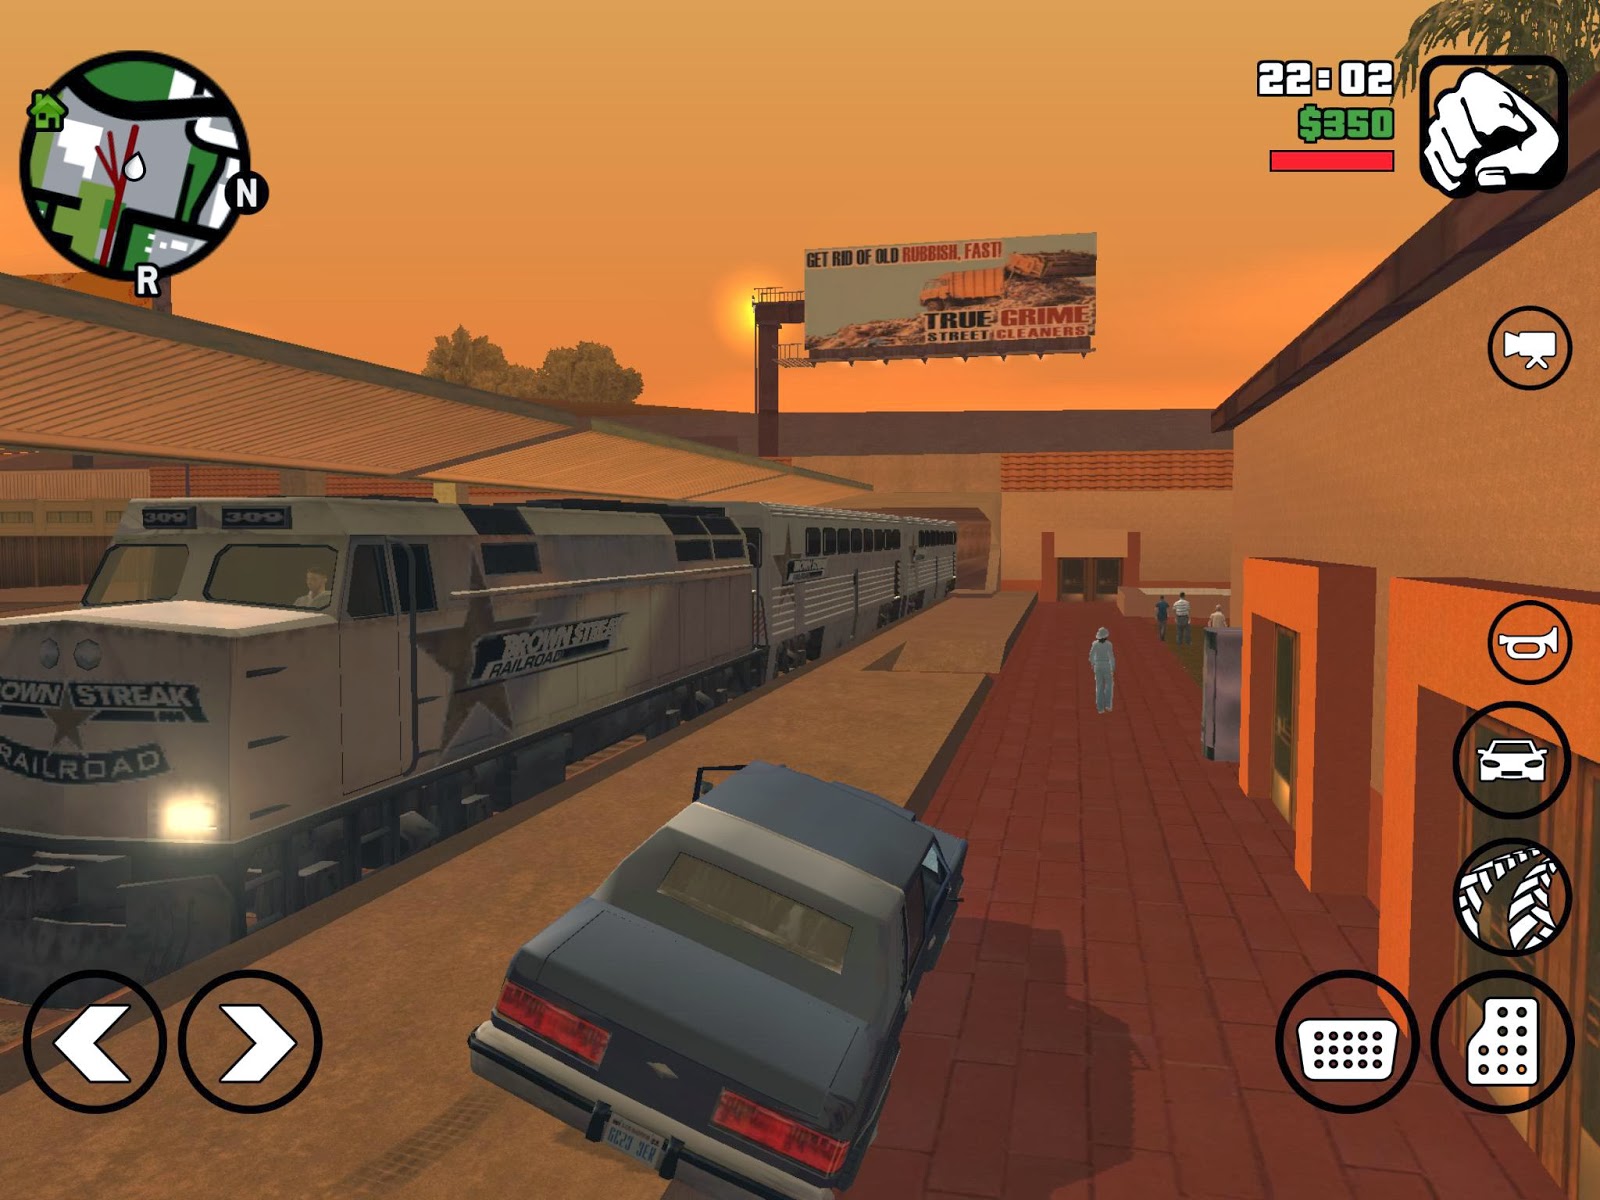 GTA San Andreas game APK weebly.com